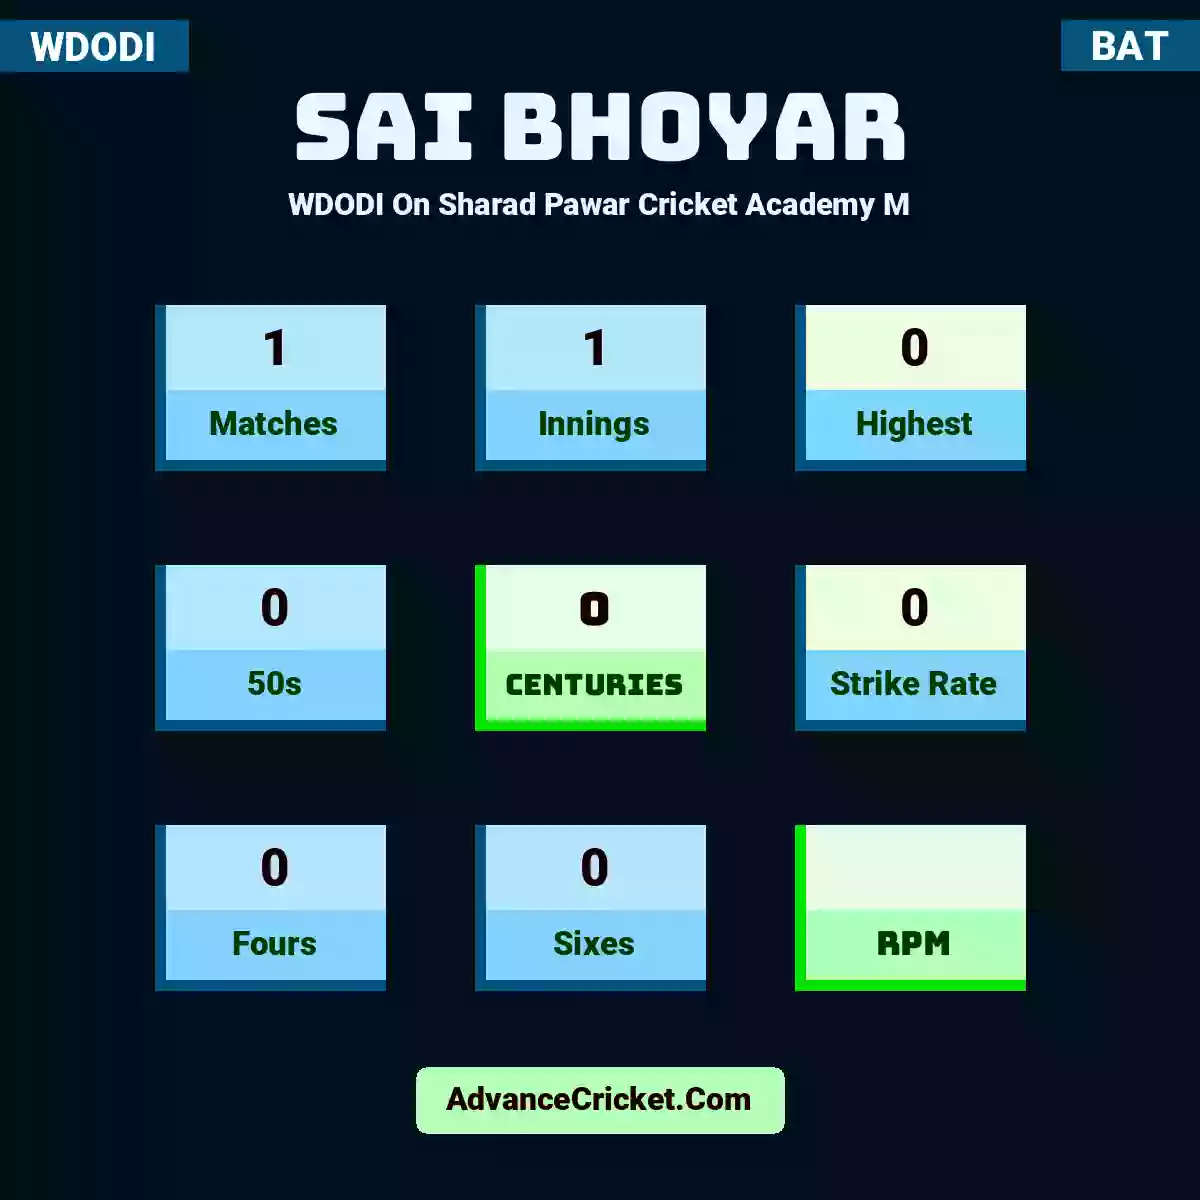 Sai Bhoyar WDODI  On Sharad Pawar Cricket Academy M, Sai Bhoyar played 1 matches, scored 0 runs as highest, 0 half-centuries, and 0 centuries, with a strike rate of 0. S.Bhoyar hit 0 fours and 0 sixes.